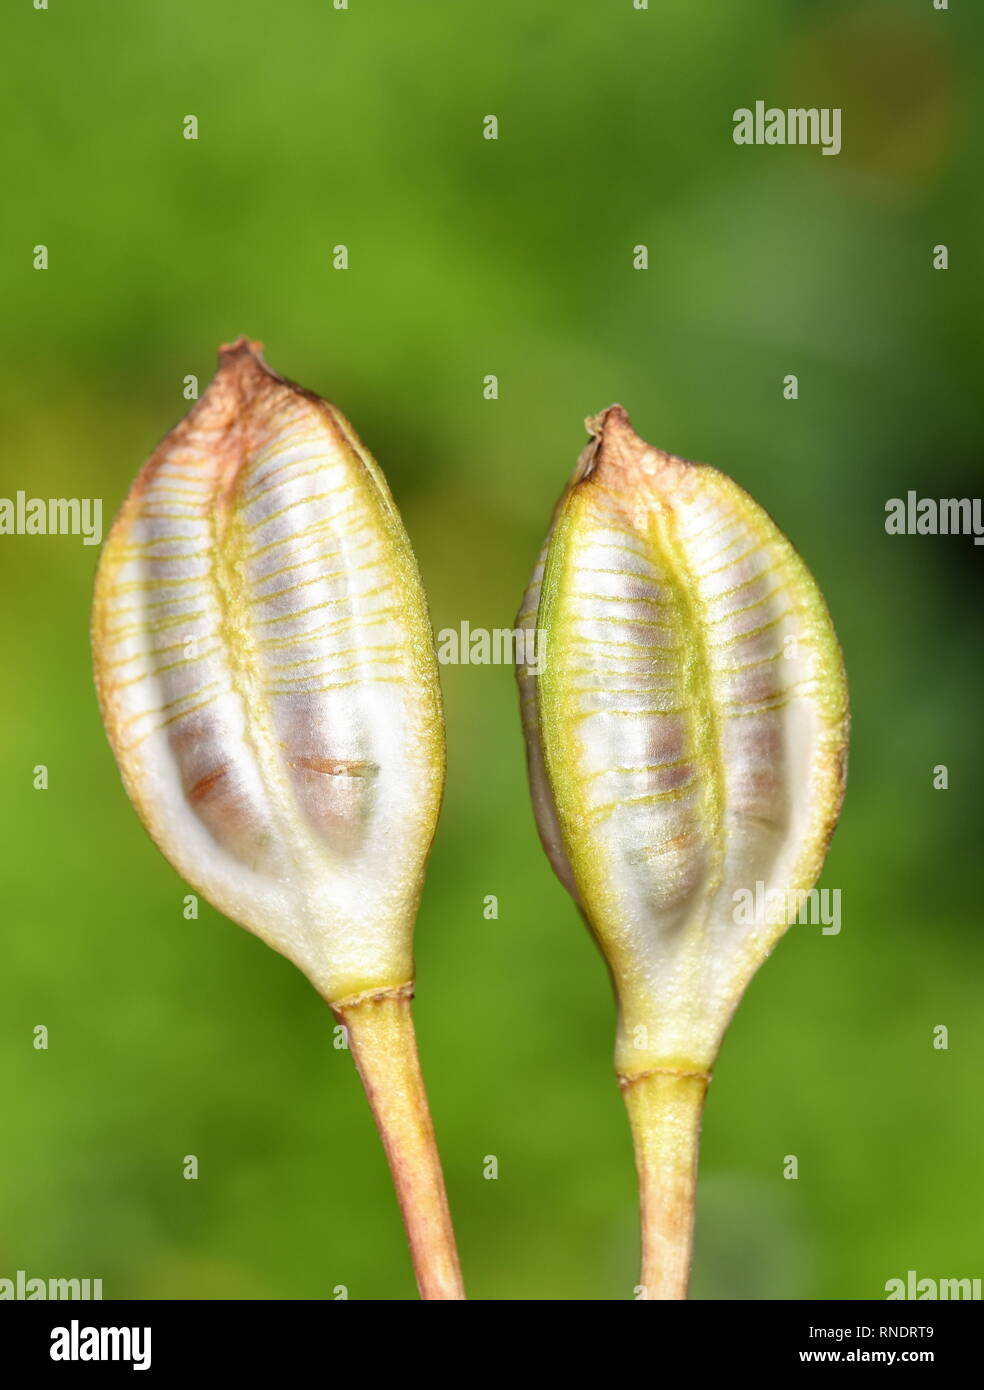 Seed capsules from a wild tulip Tulipa tarda on green background Stock Photo